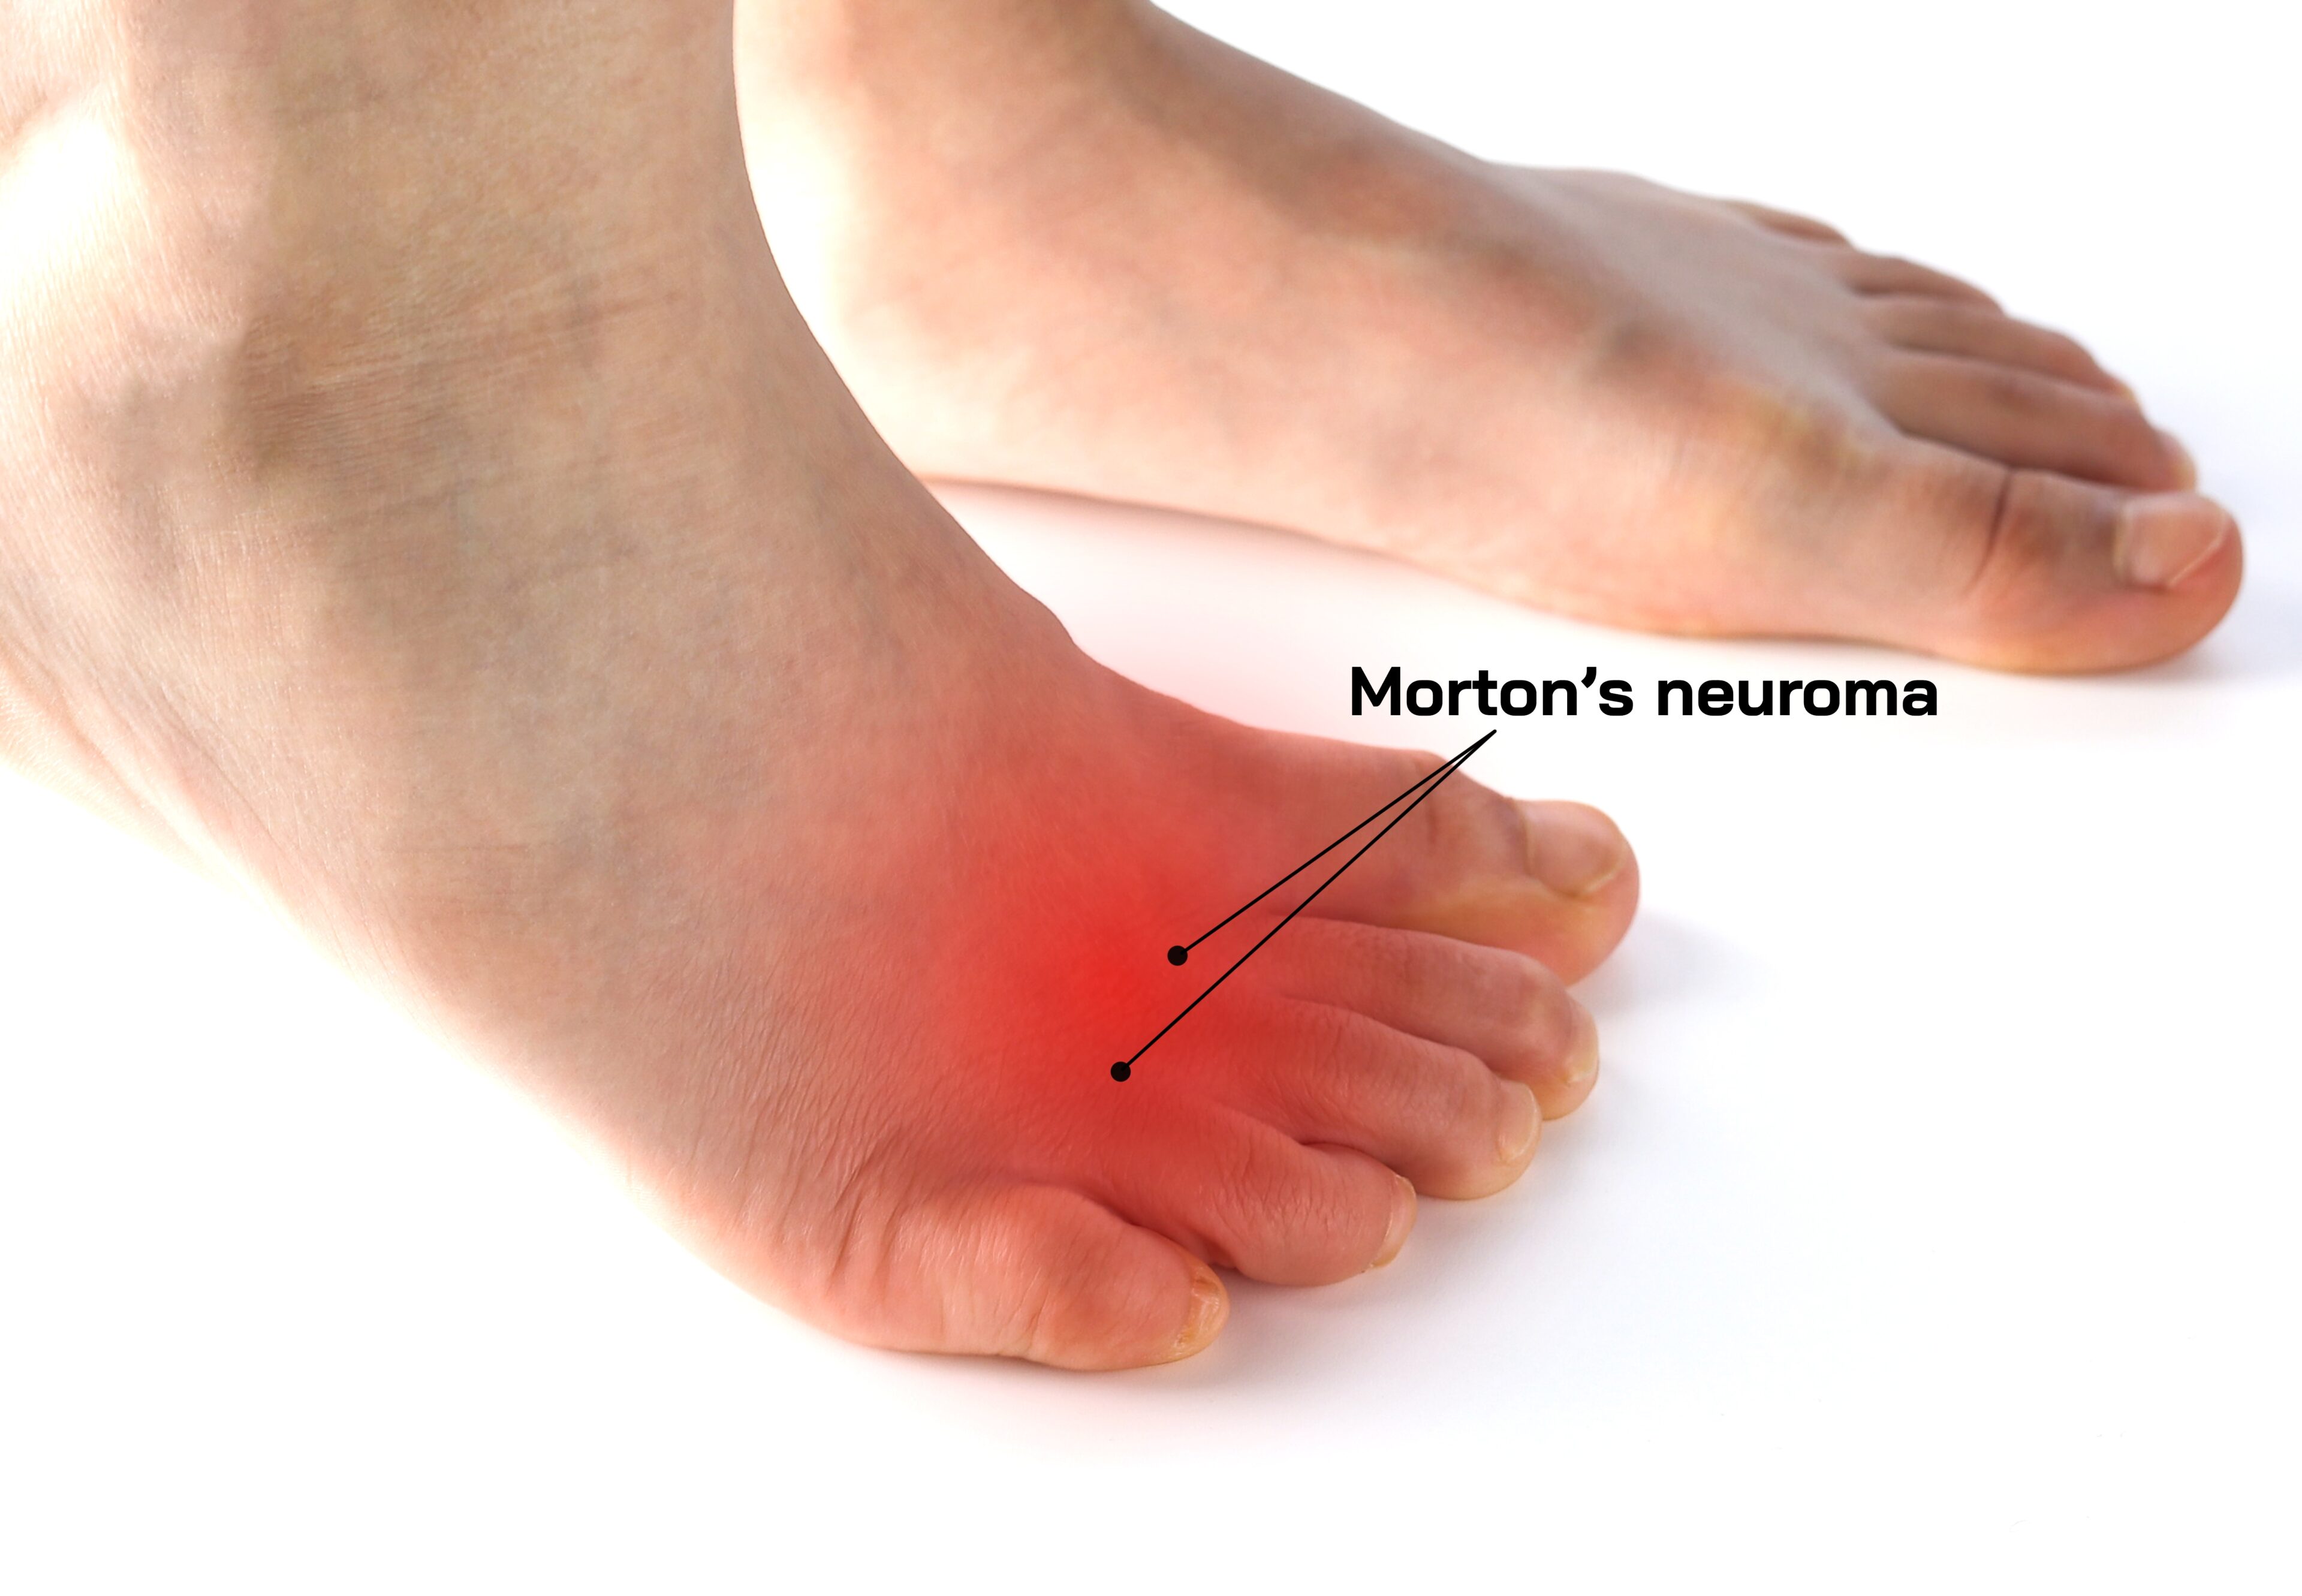 Morton’s Neuroma